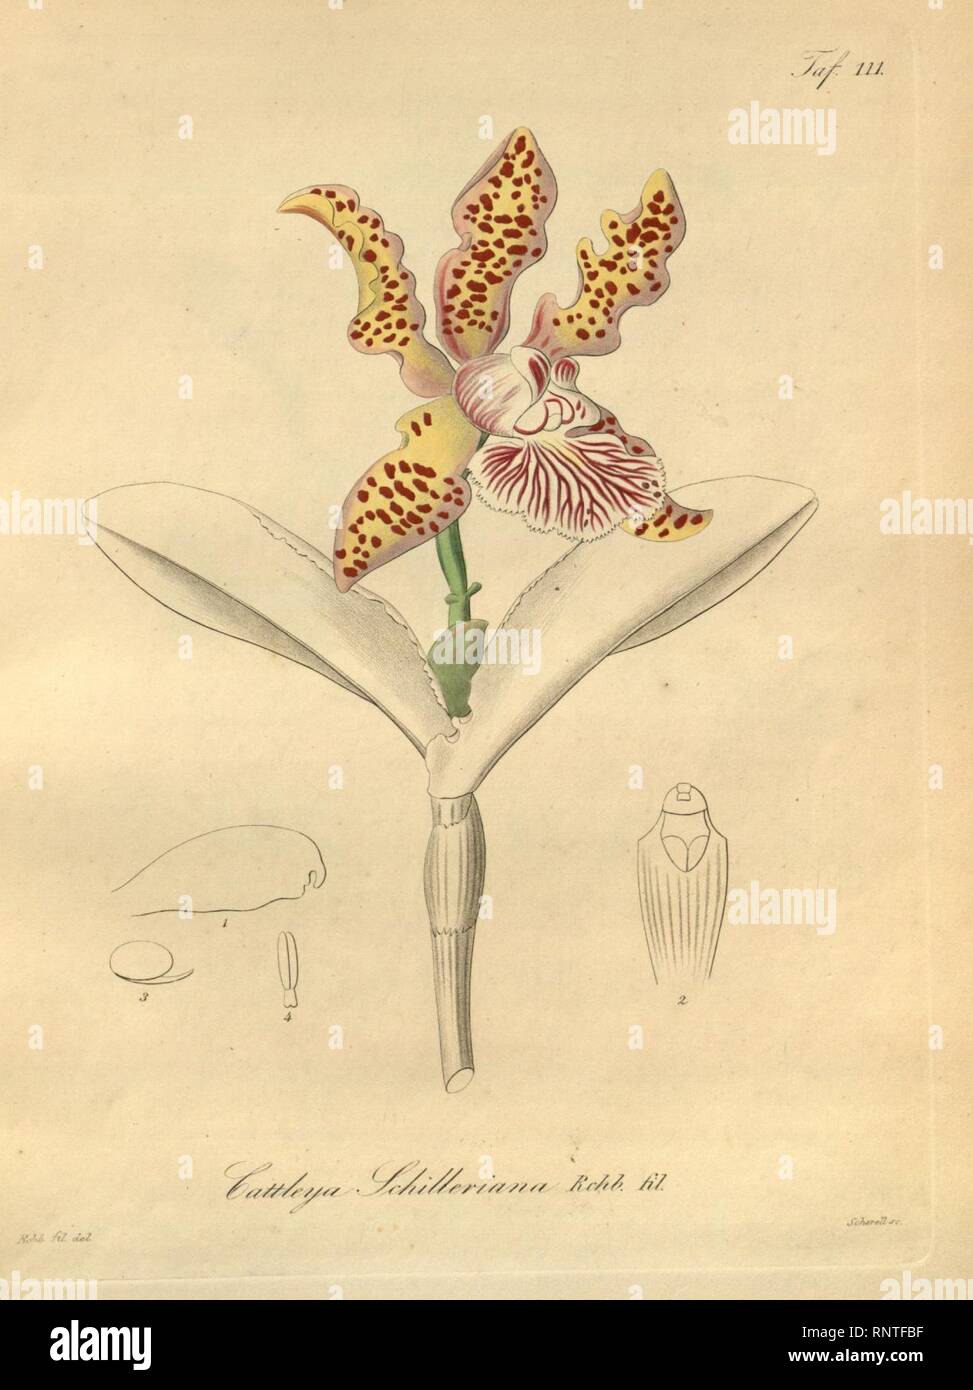 Cattleya schilleriana-Xenia 2-111 (1874). Stock Photo